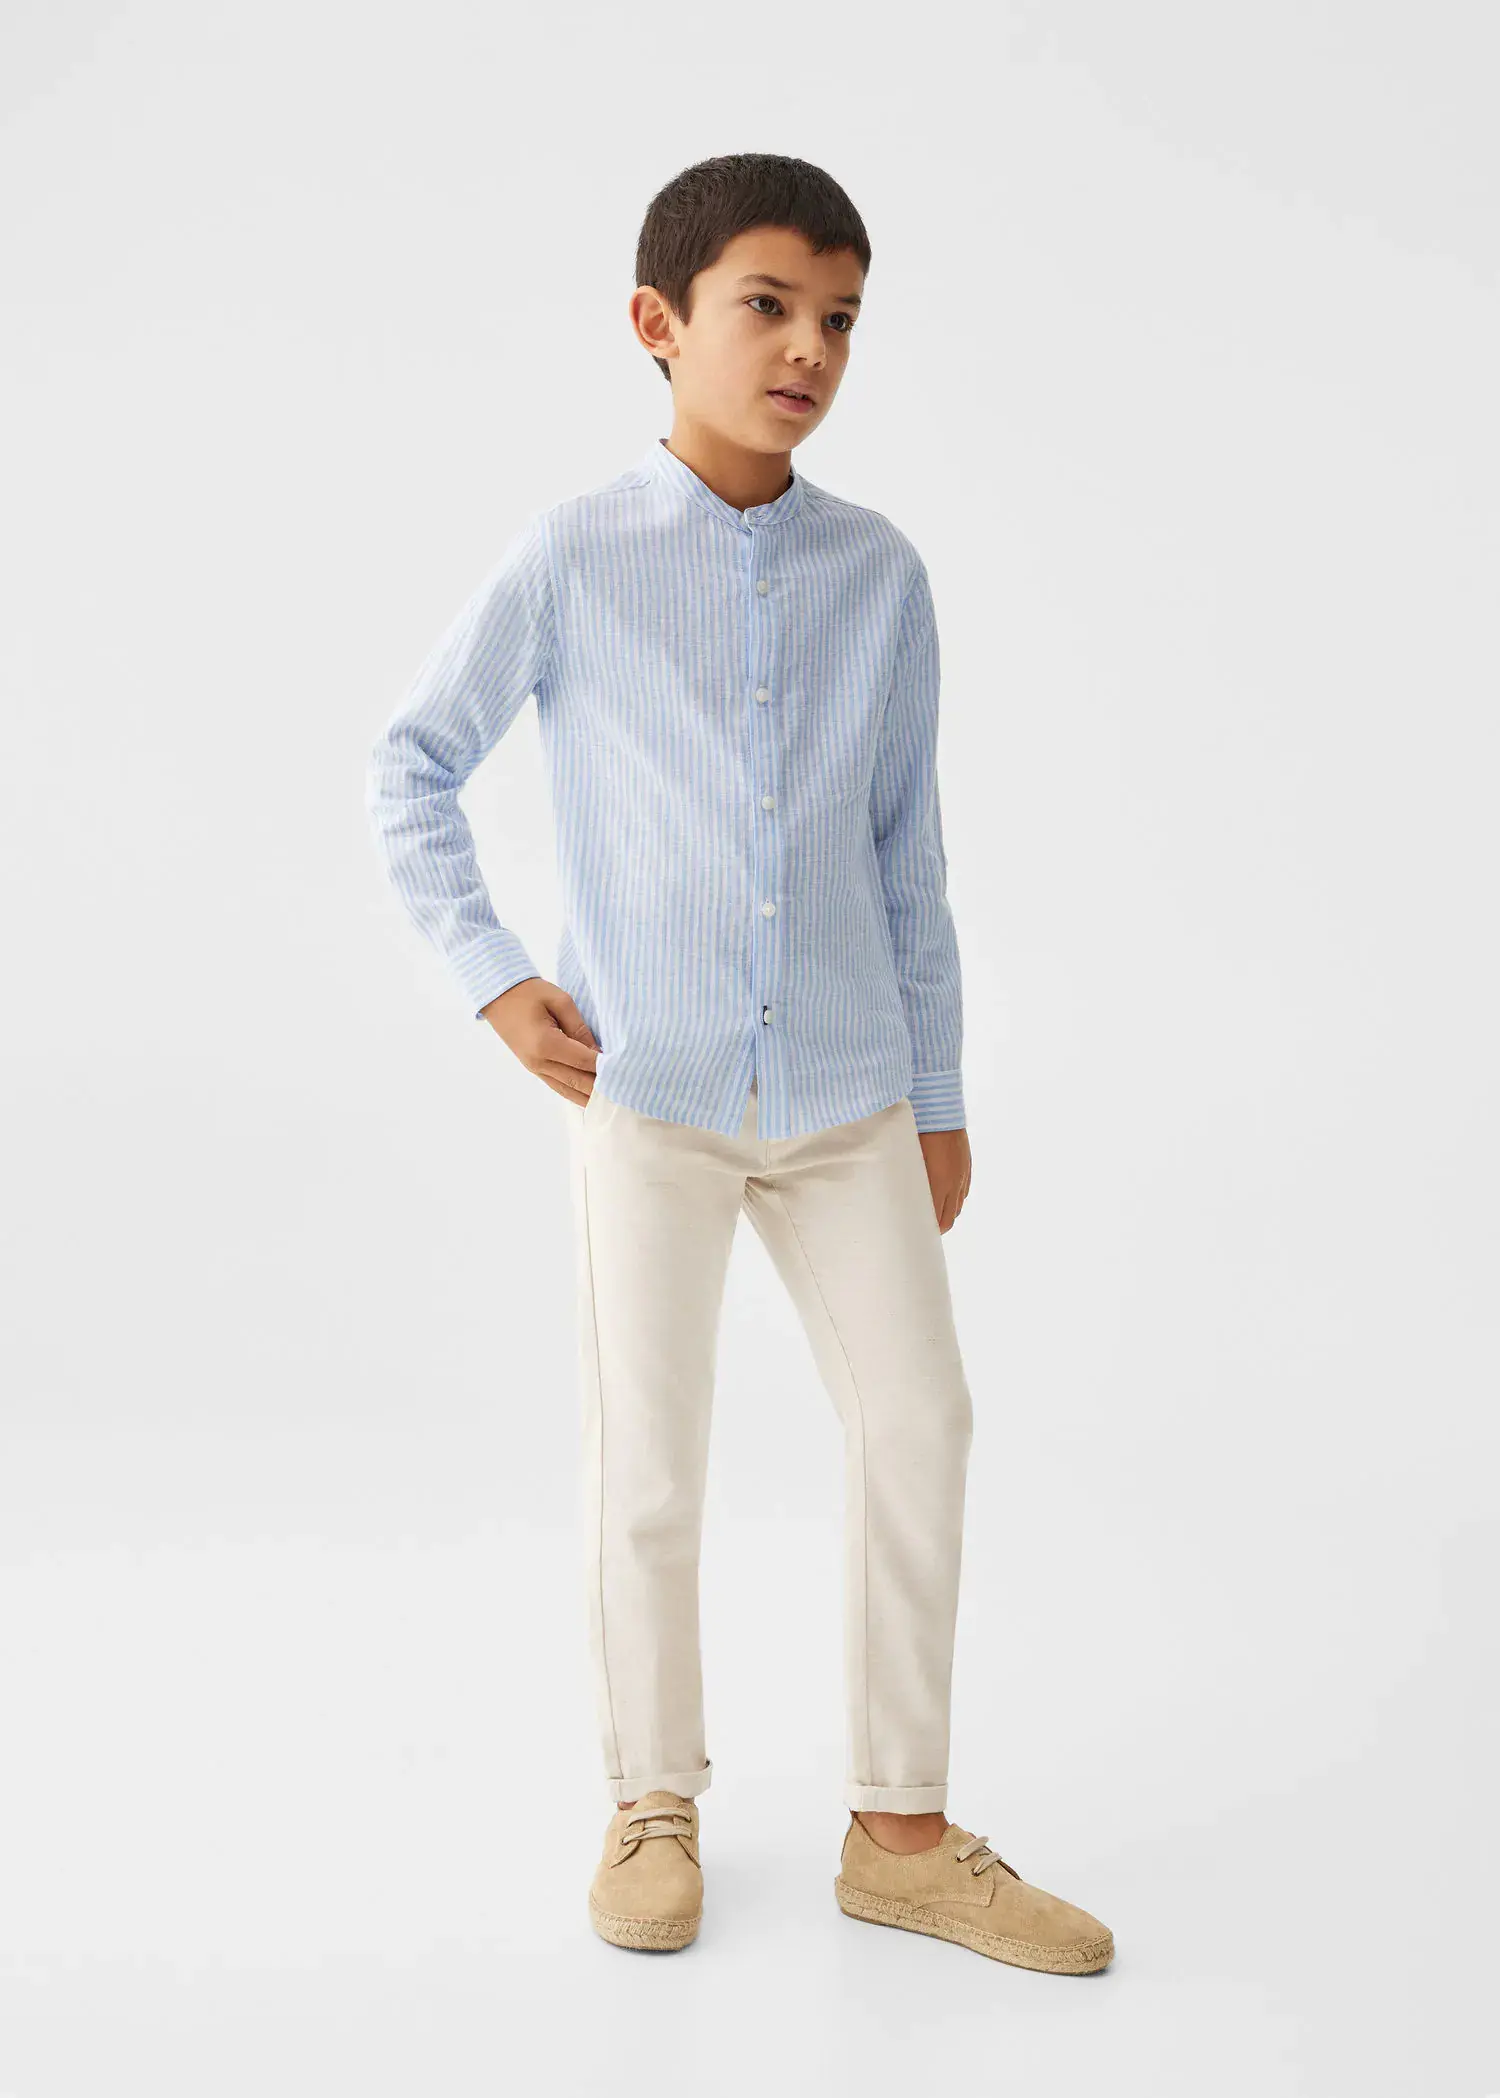 Mango KIDS/ Linen chinos. a young boy wearing a light blue dress shirt and white pants. 